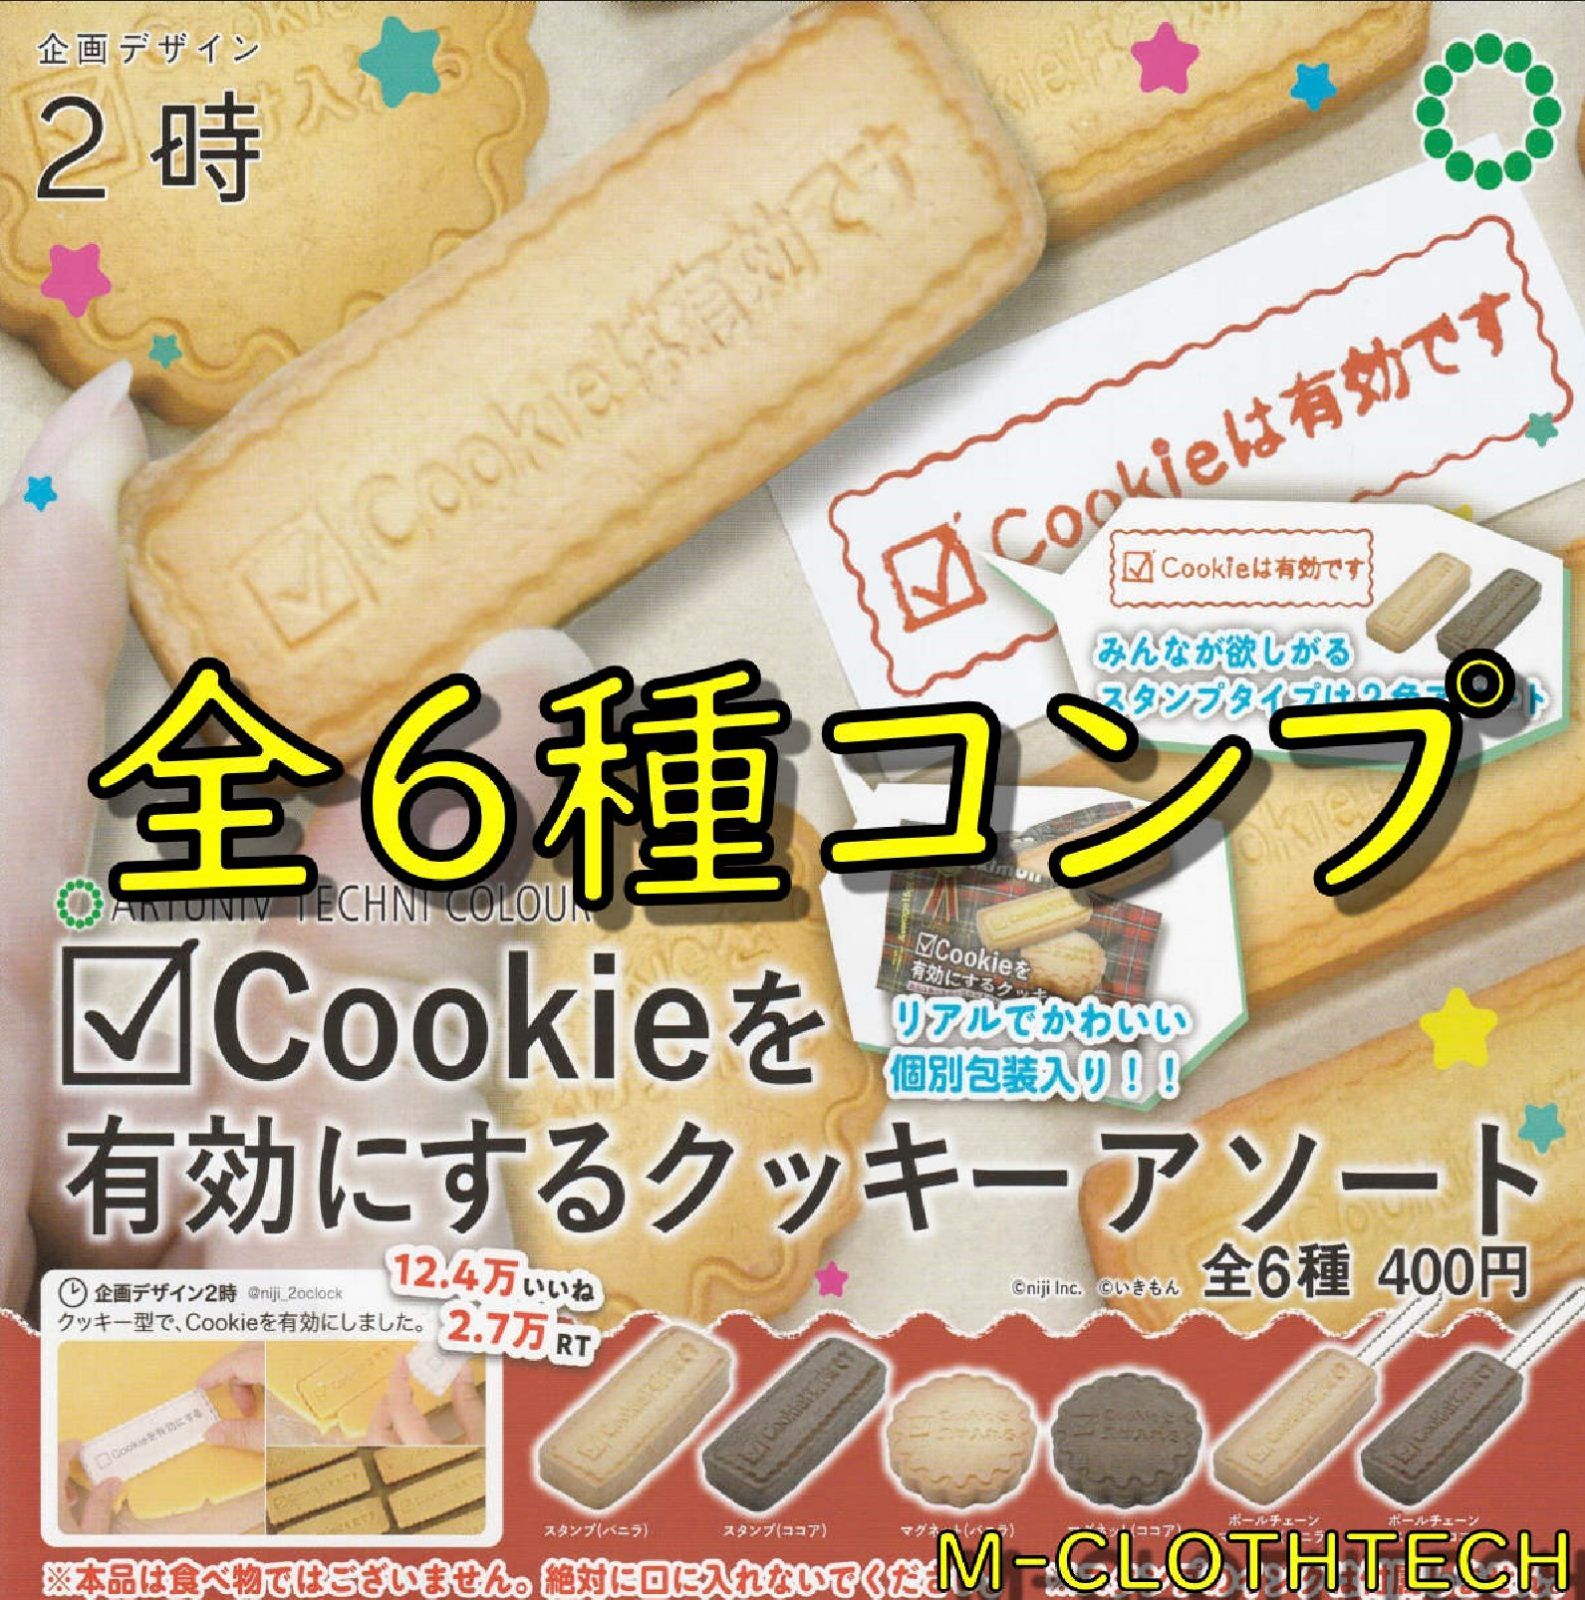 Cookieを有効にするクッキーアソート(ココア)